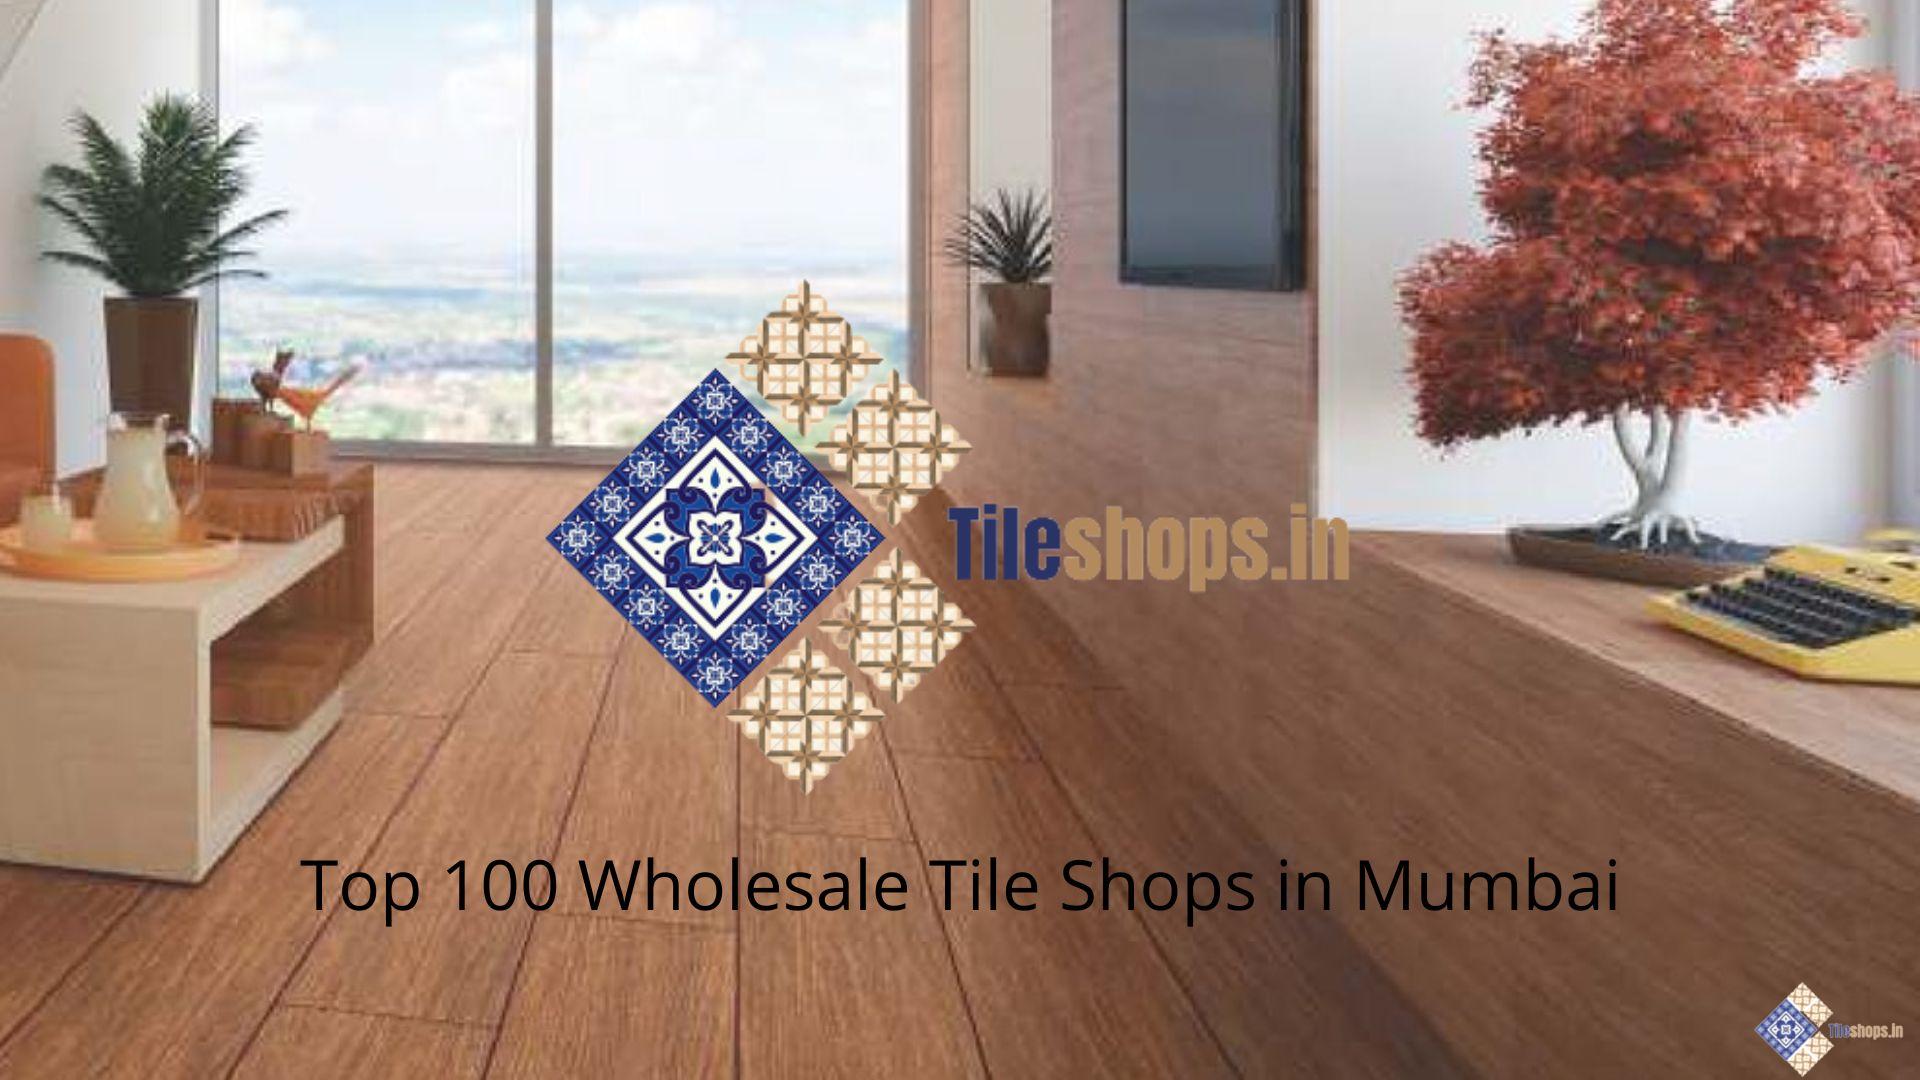 Top 100 Wholesale Tile Shops in Mumbai